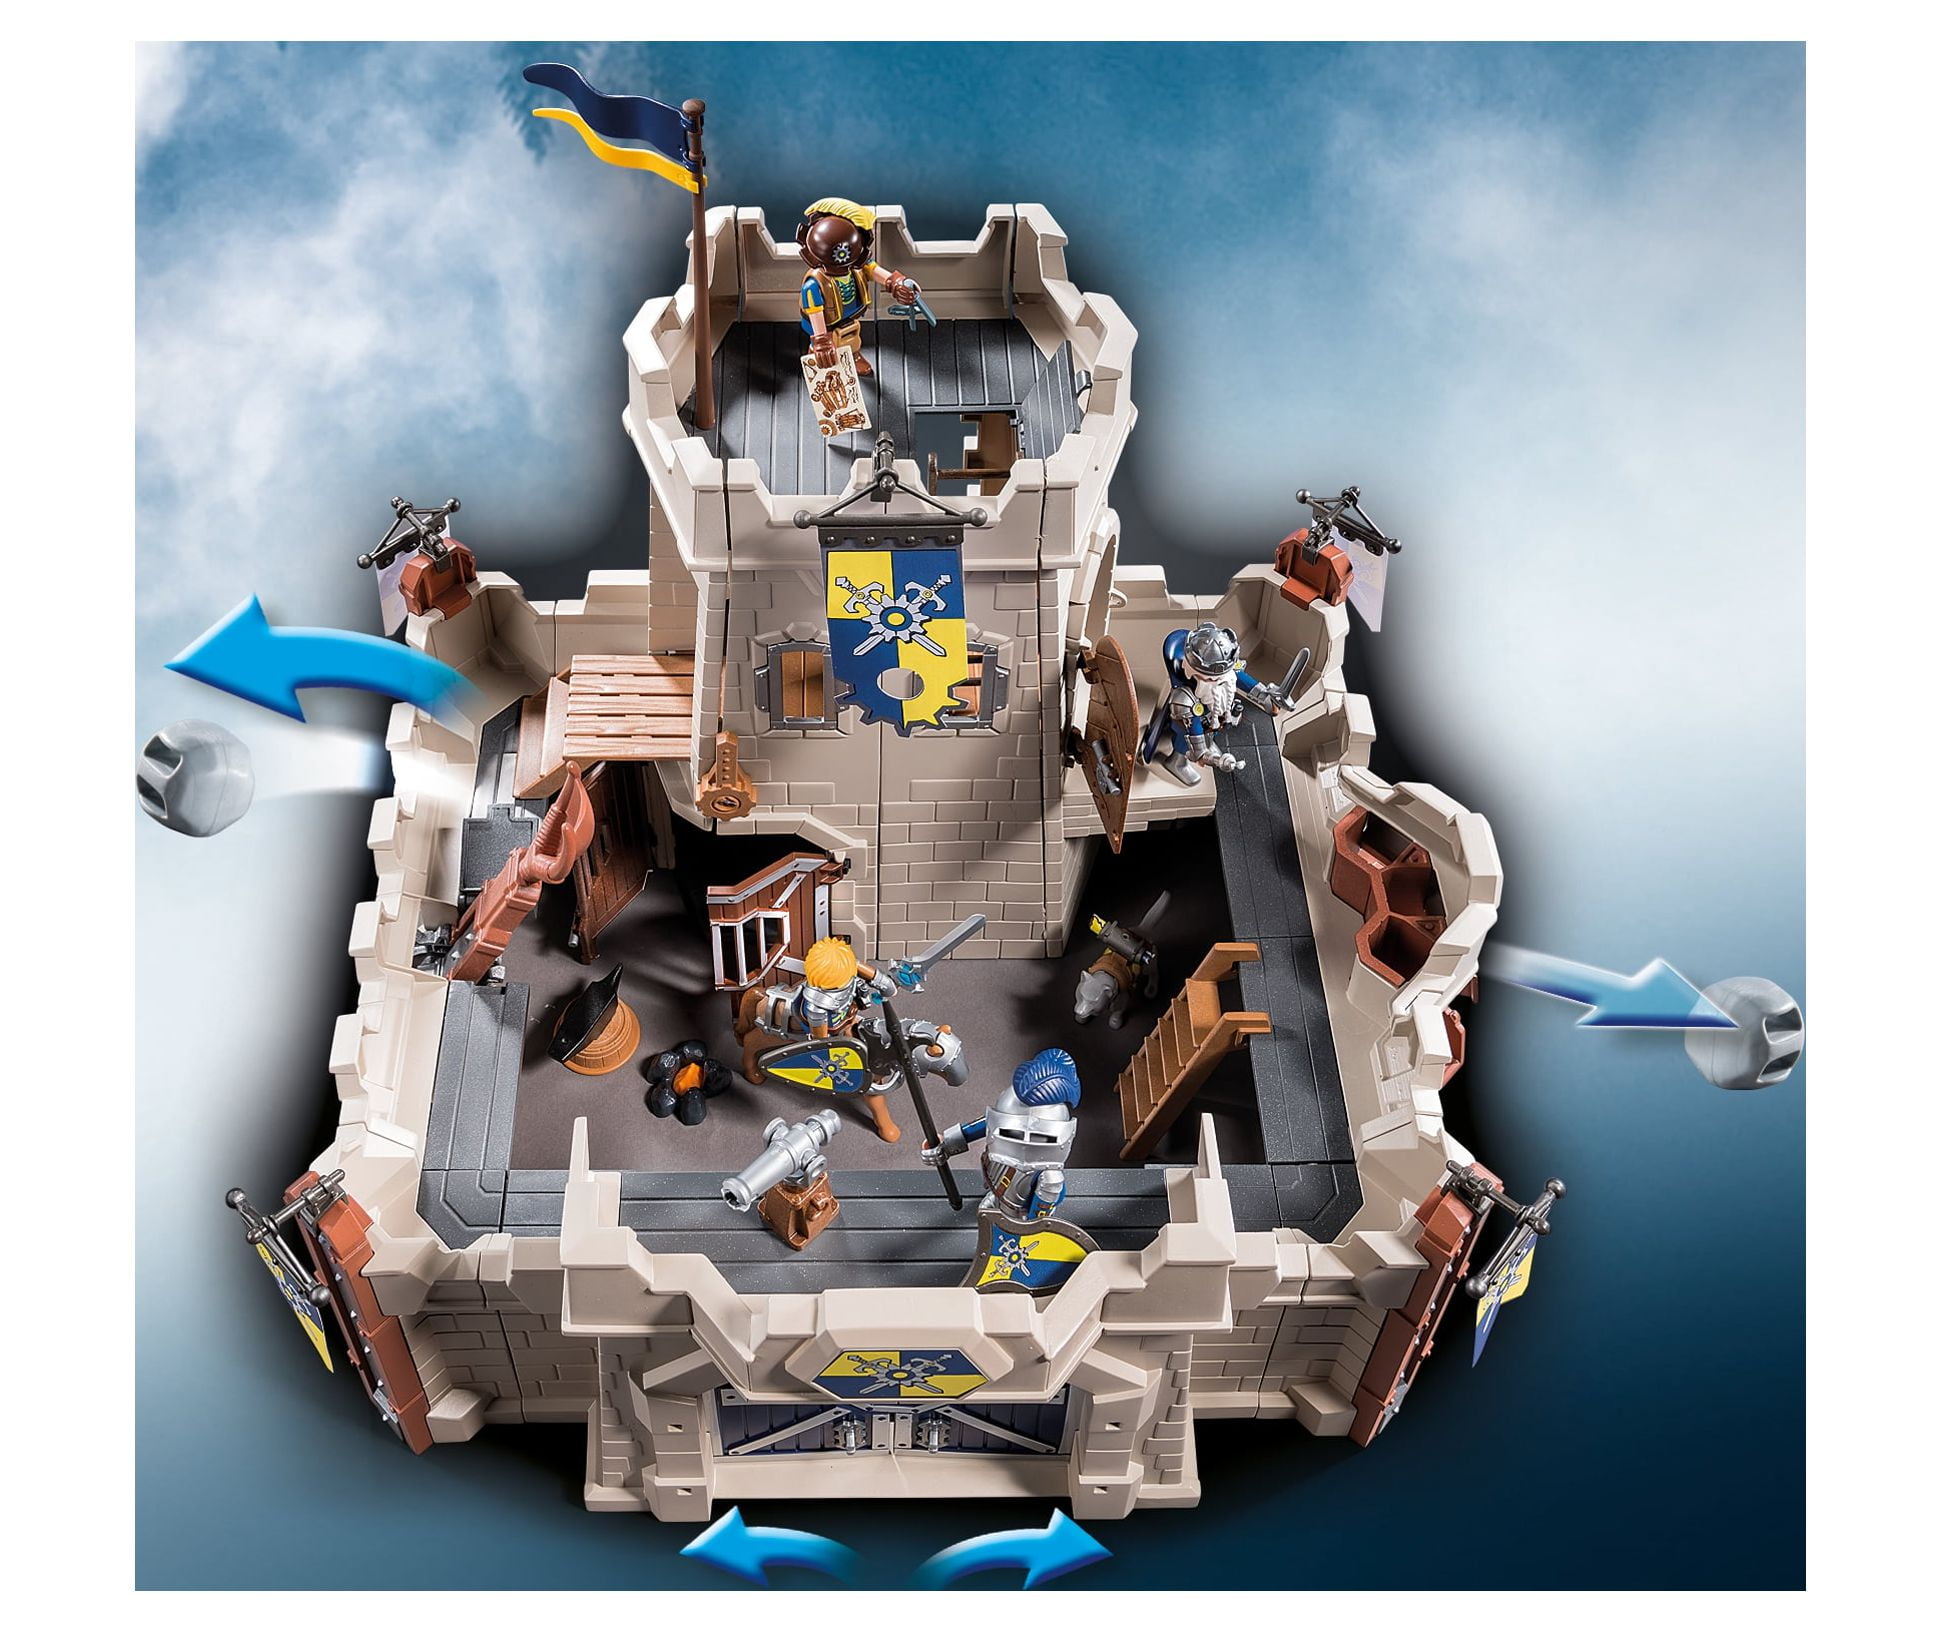 Playmobil Novelmore Knights Castles, Ships & Figures Fun Playsets